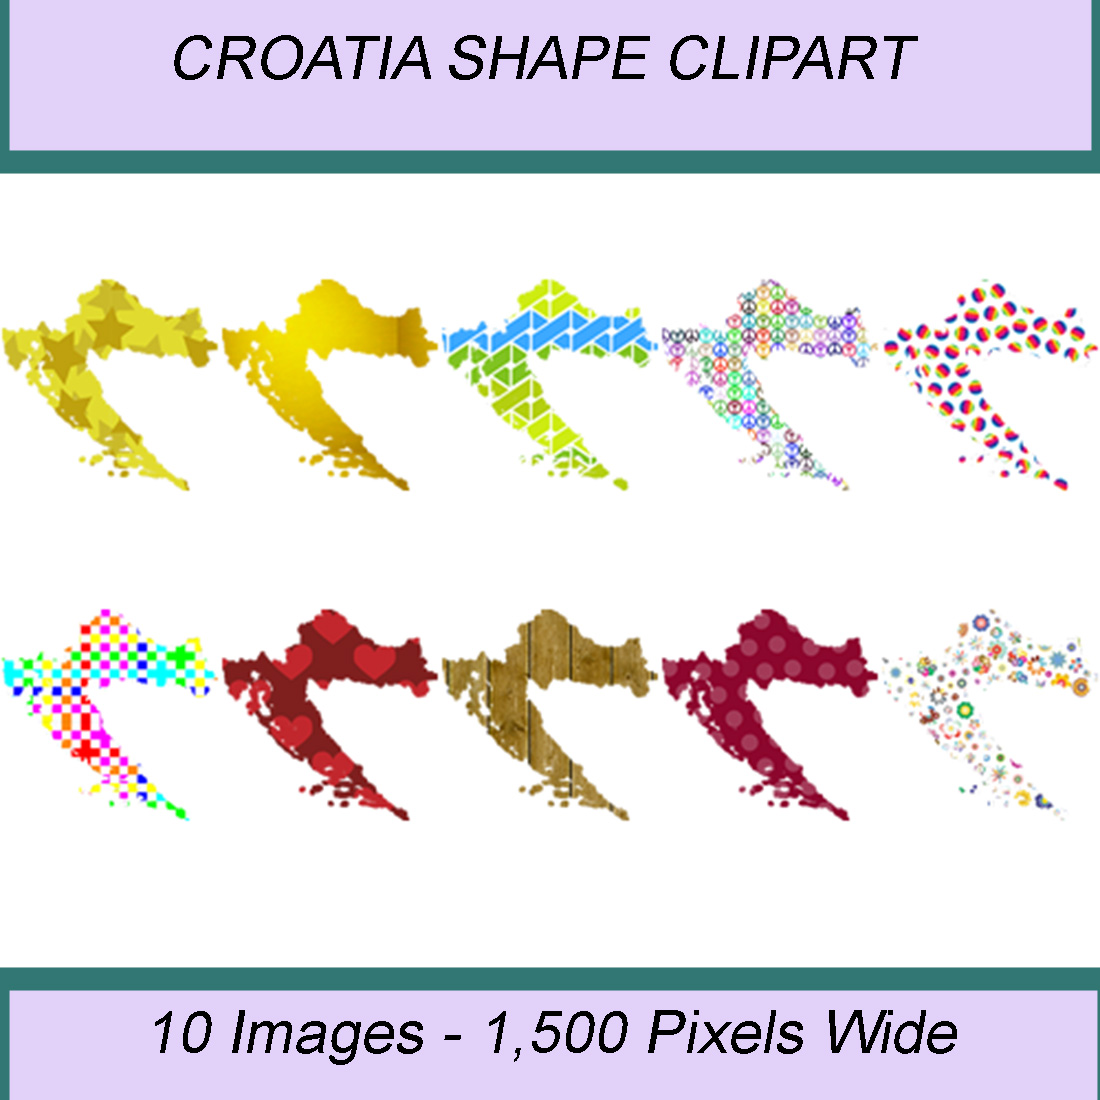 CROATIA SHAPE CLIPART ICONS cover image.